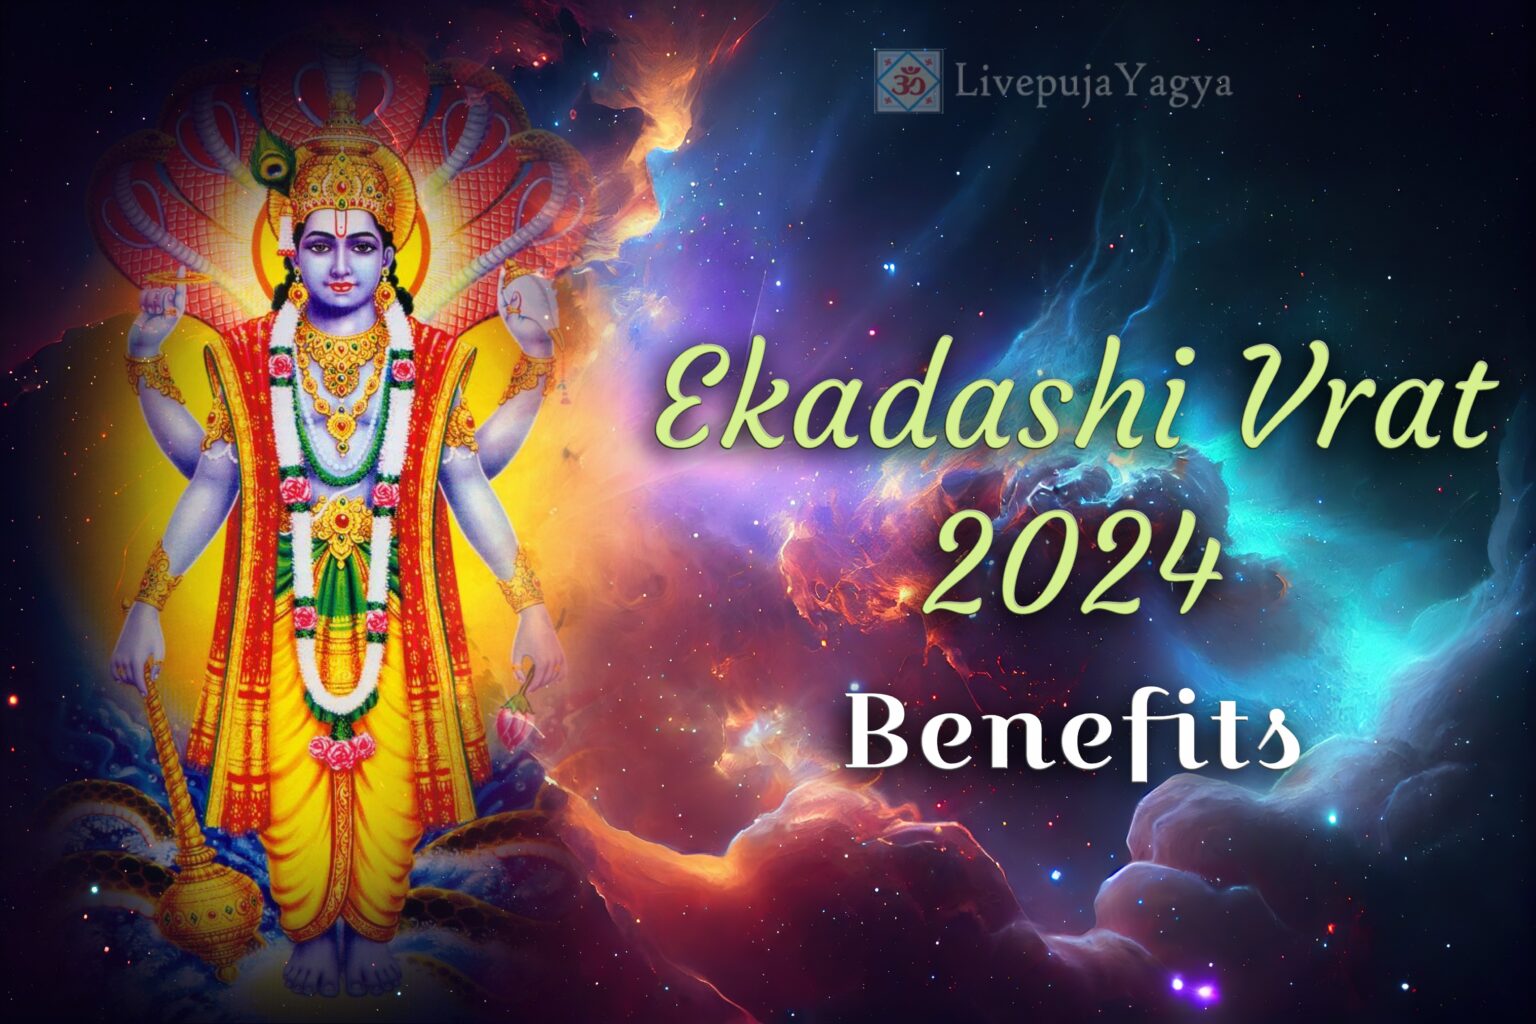 Ekadashi Vrat 2024 Benefits Divine Connection & Redemption